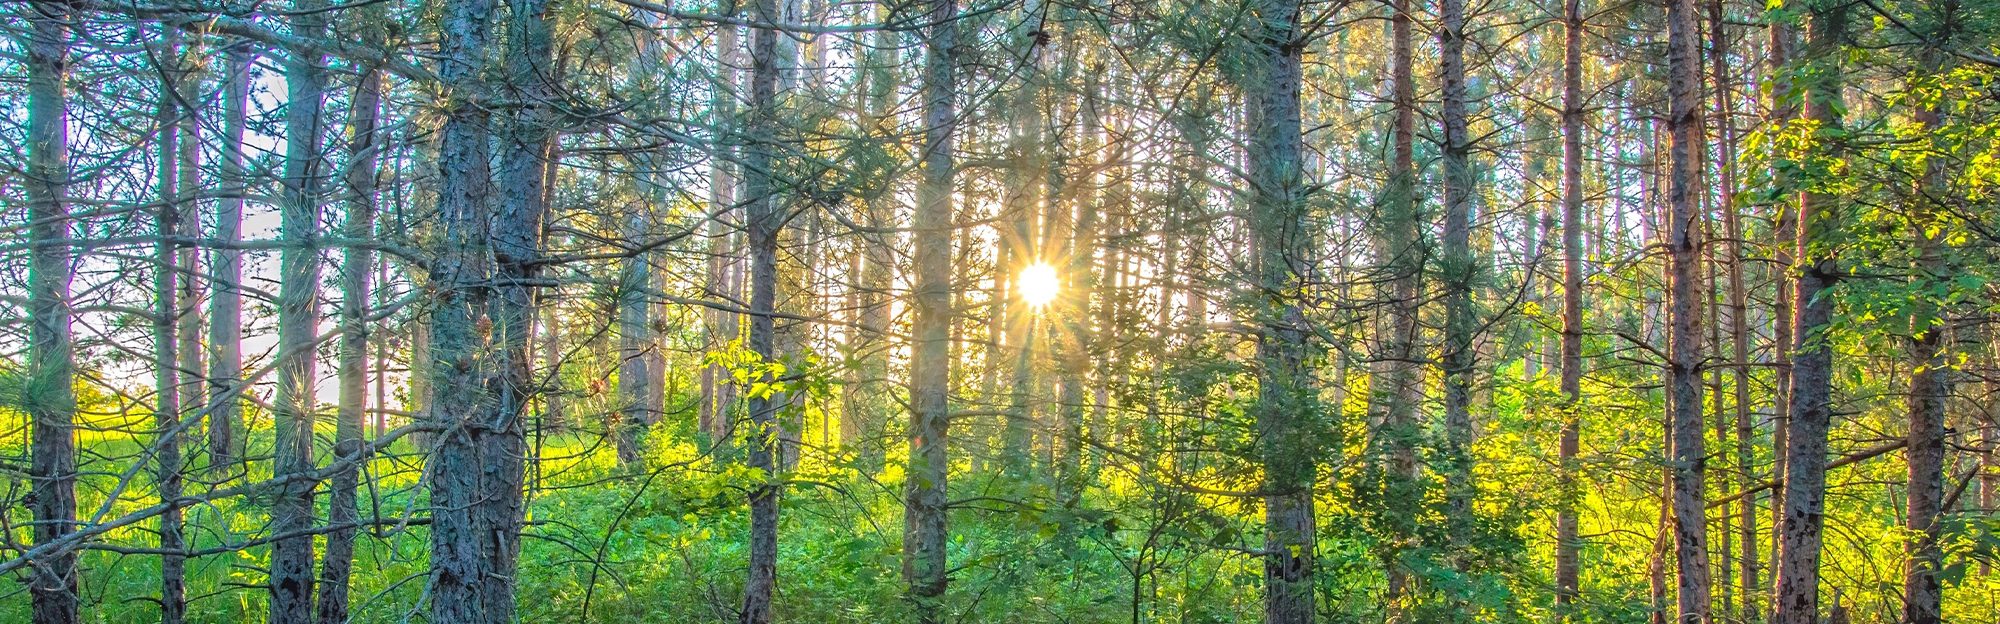 Sun beams through forest